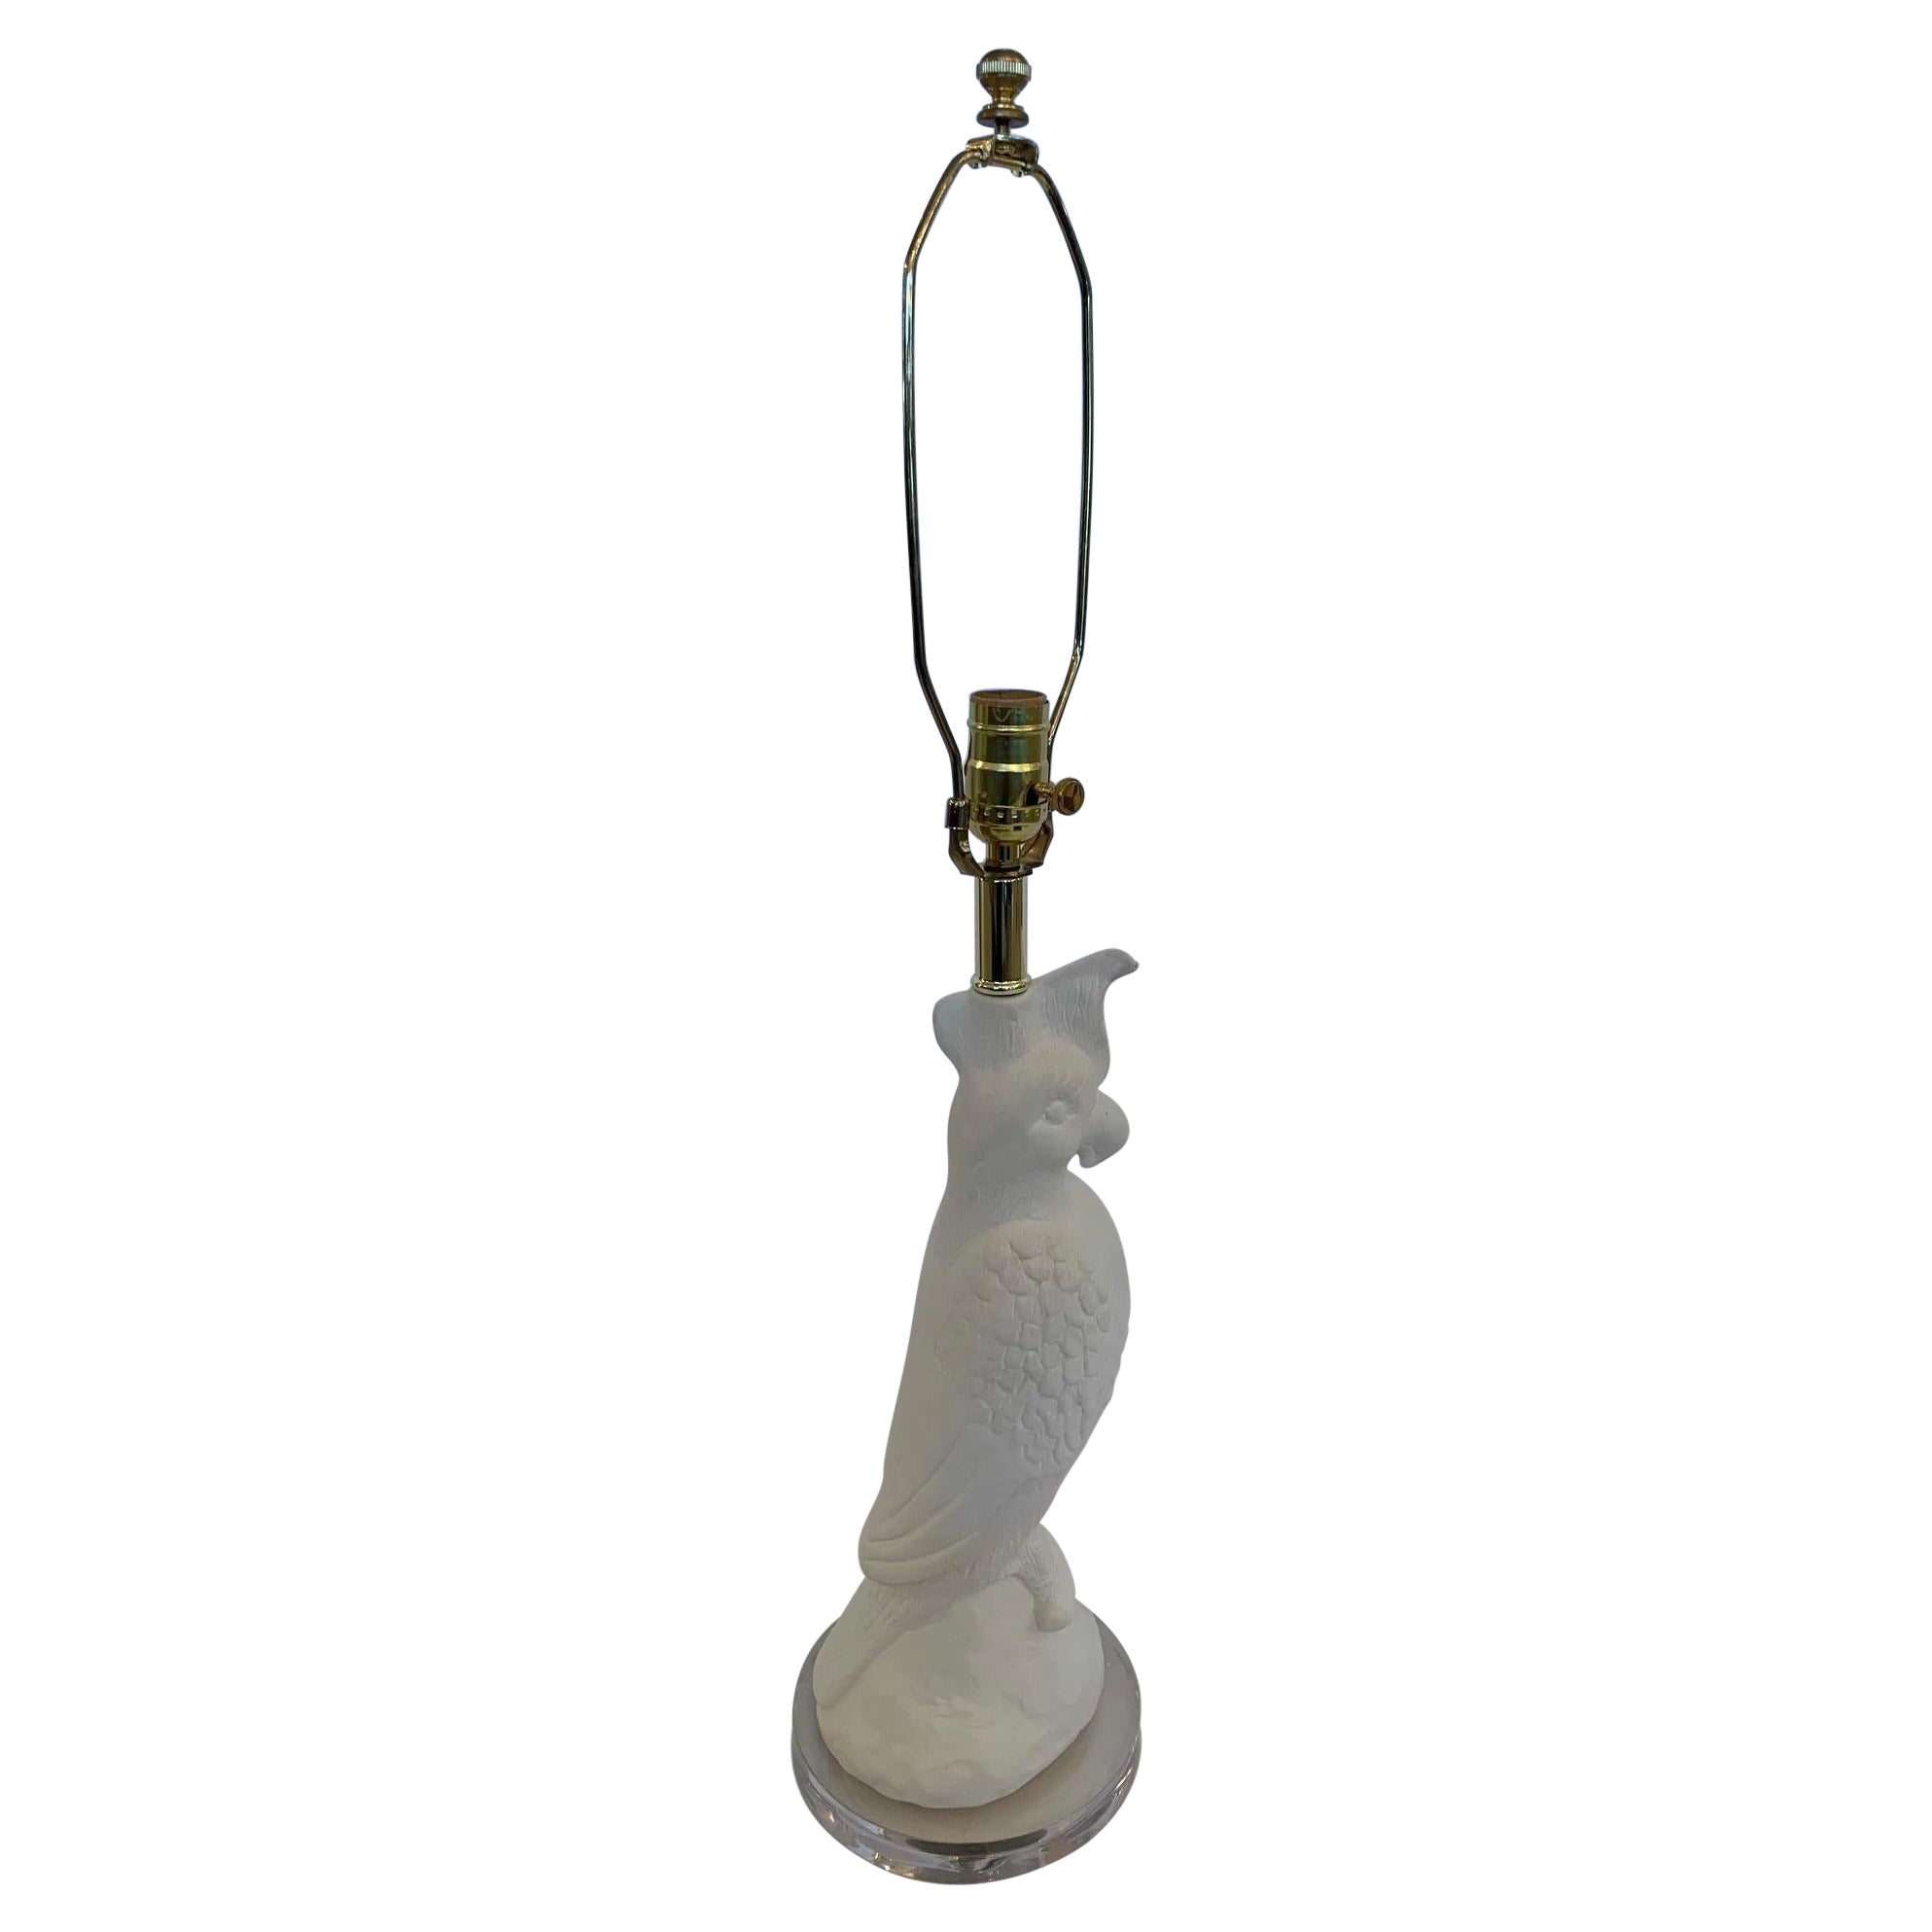 Stylish White Ceramic Parrot Shaped Table Lamp